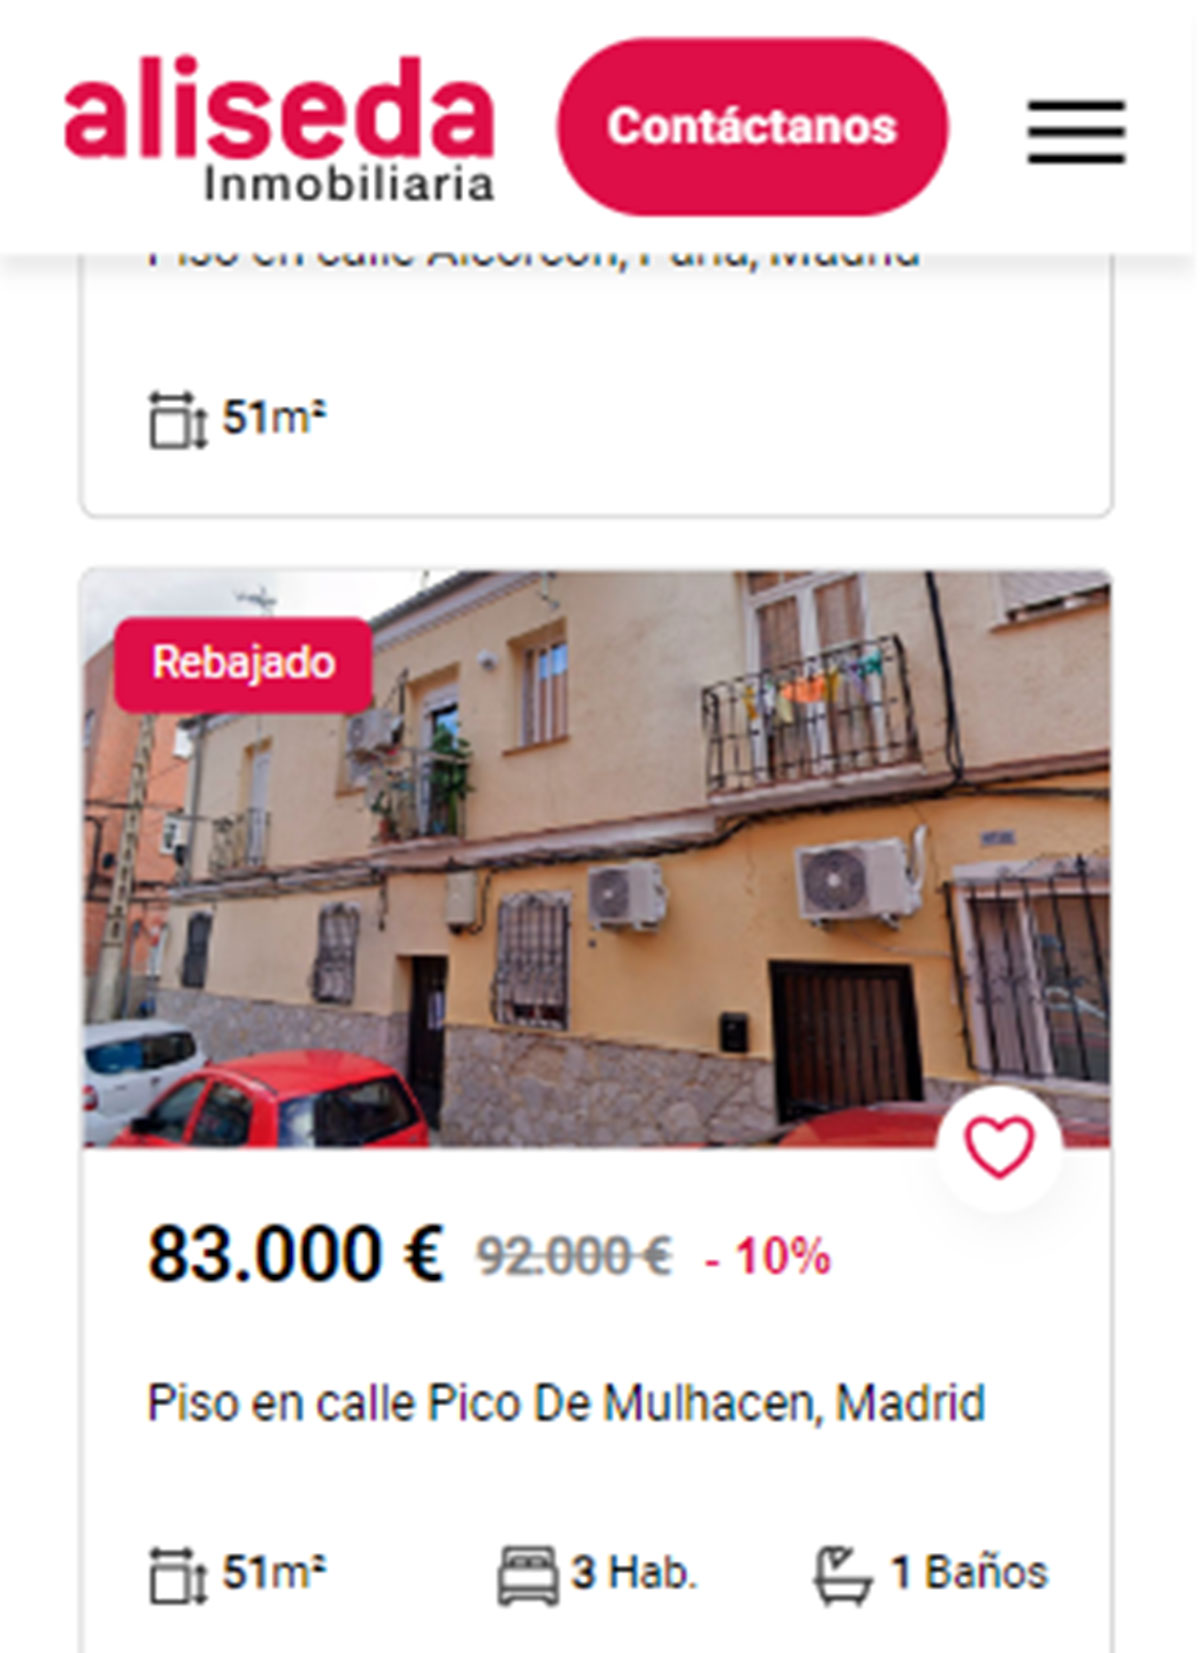 Piso en Madrid por 83.000 euros